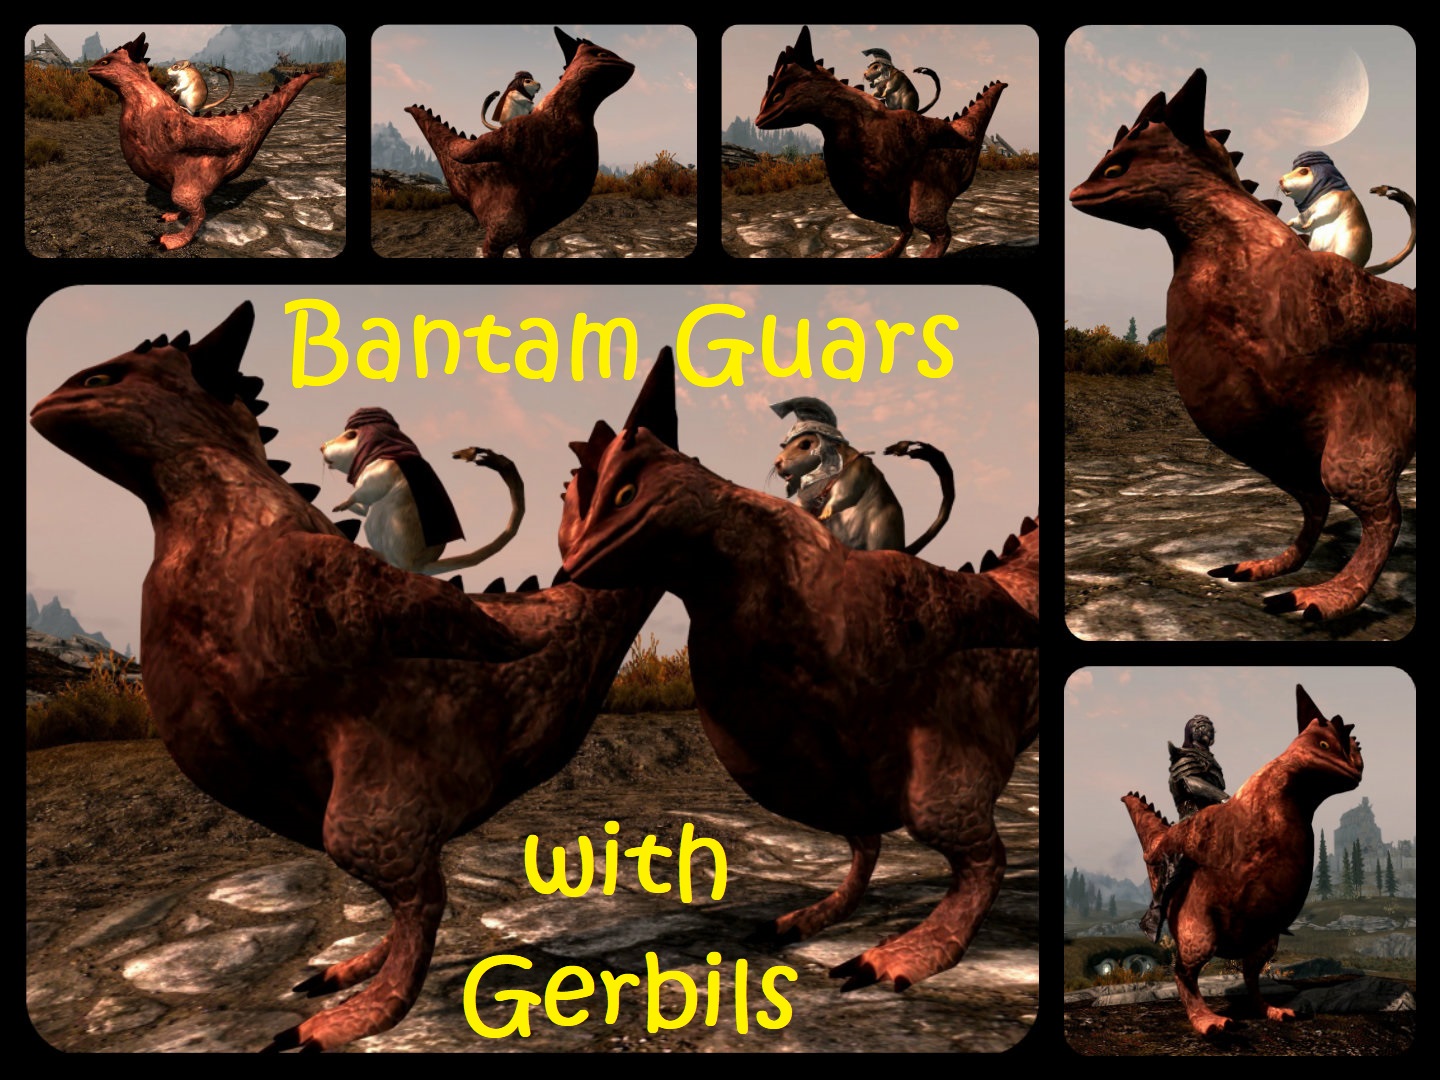 Bantam Guars with Gerbils